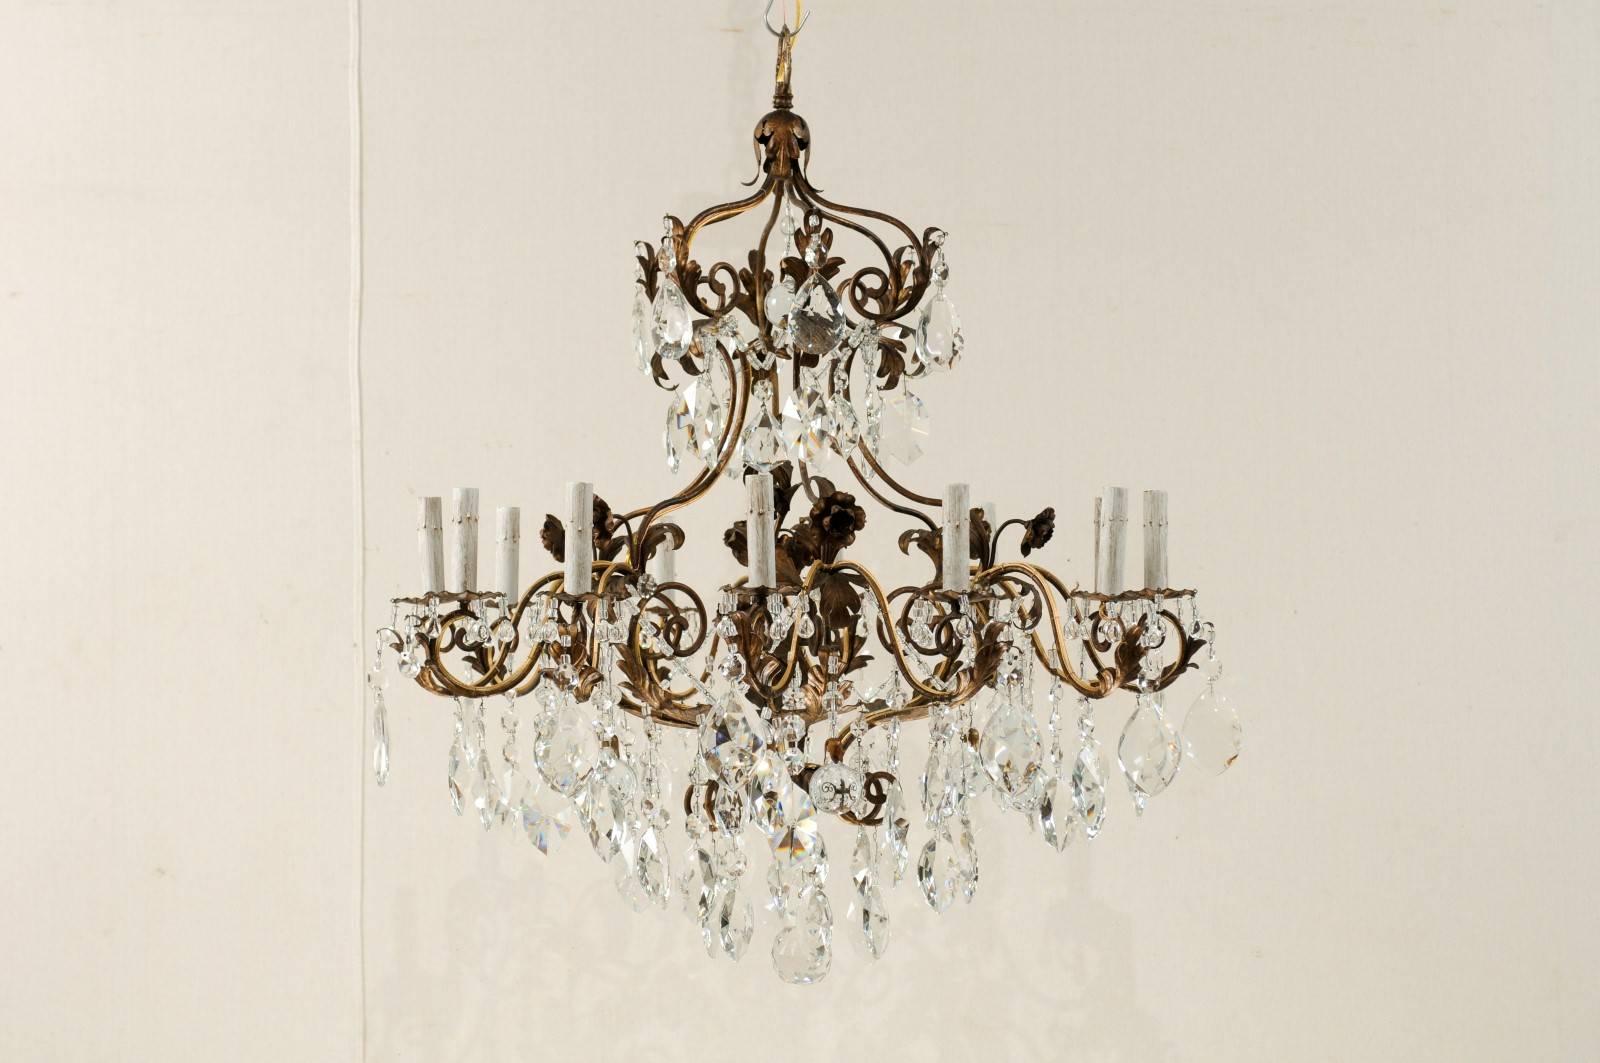 ornate chandeliers